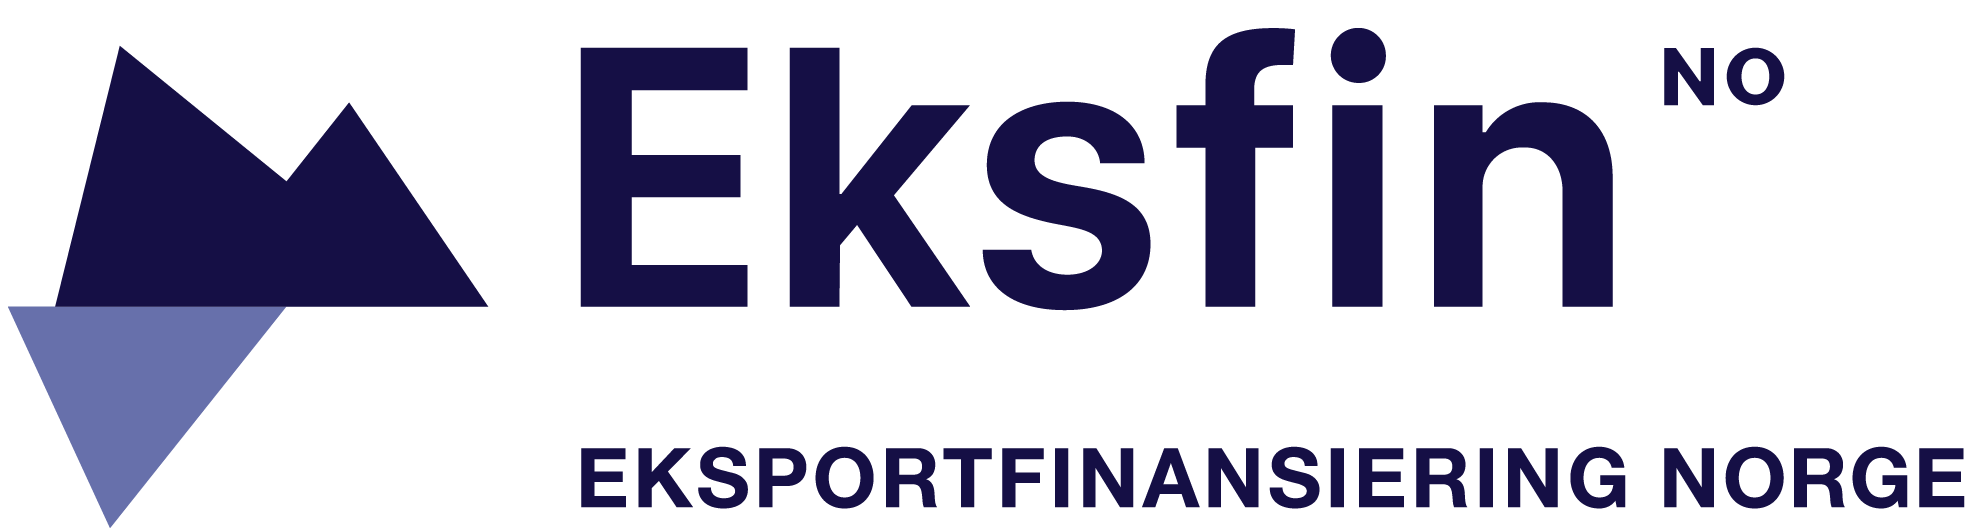 Eksfin-logo_nor_RGB_stor